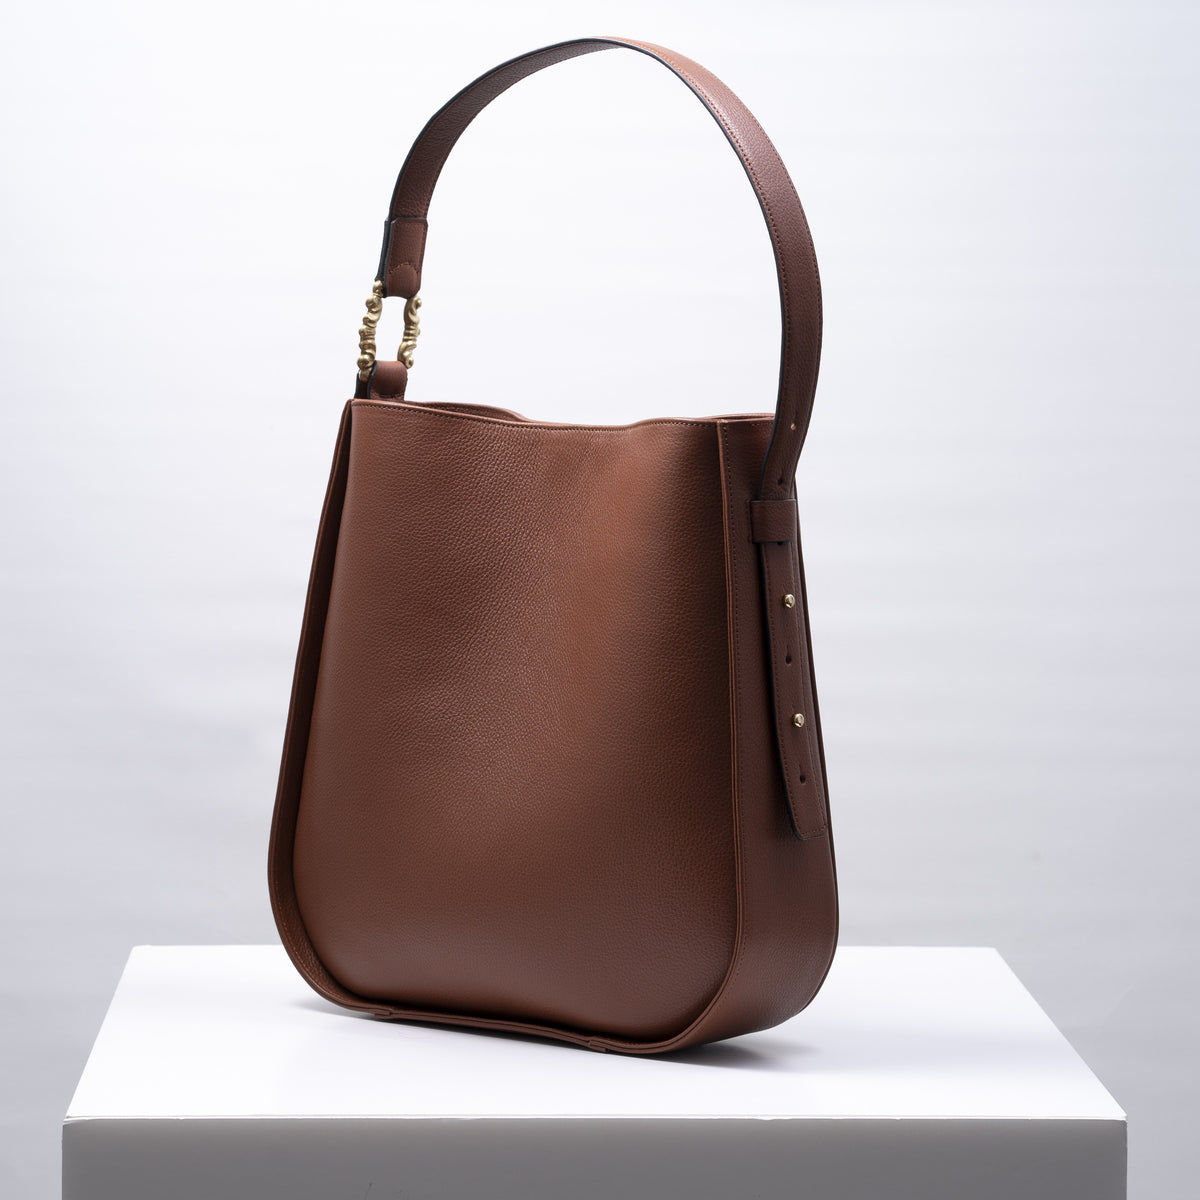 Ruth Tote Leather Bag
- Tan